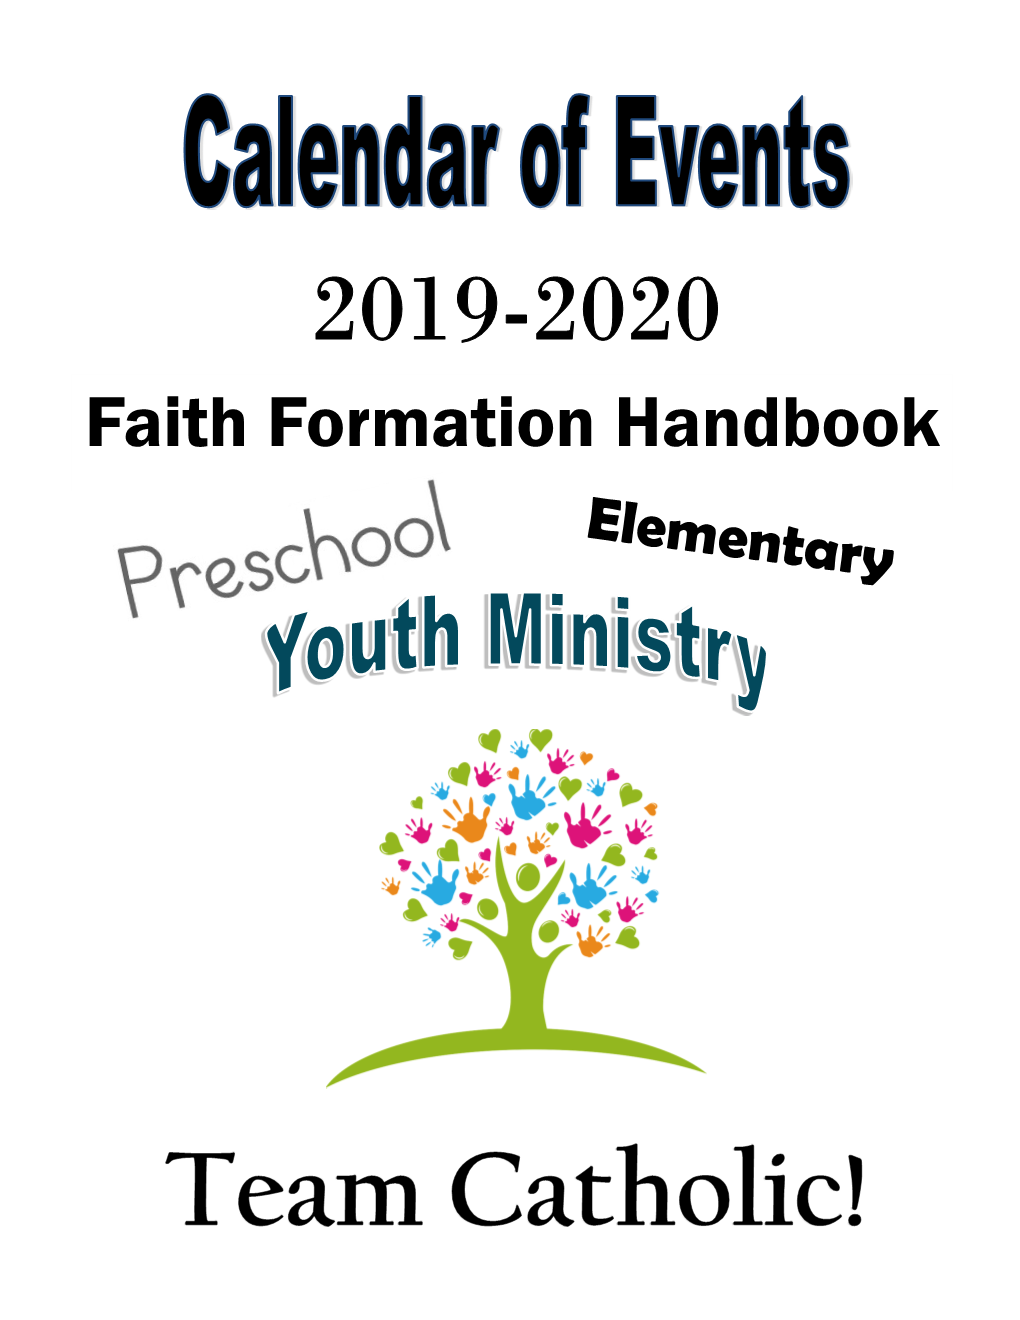 Faith Formation Handbook Blessed Sacrament Parish Community 3109 Swede Ave, Midland MI 48642-3842 (989) 835-6777, Fax (989) 835-2451